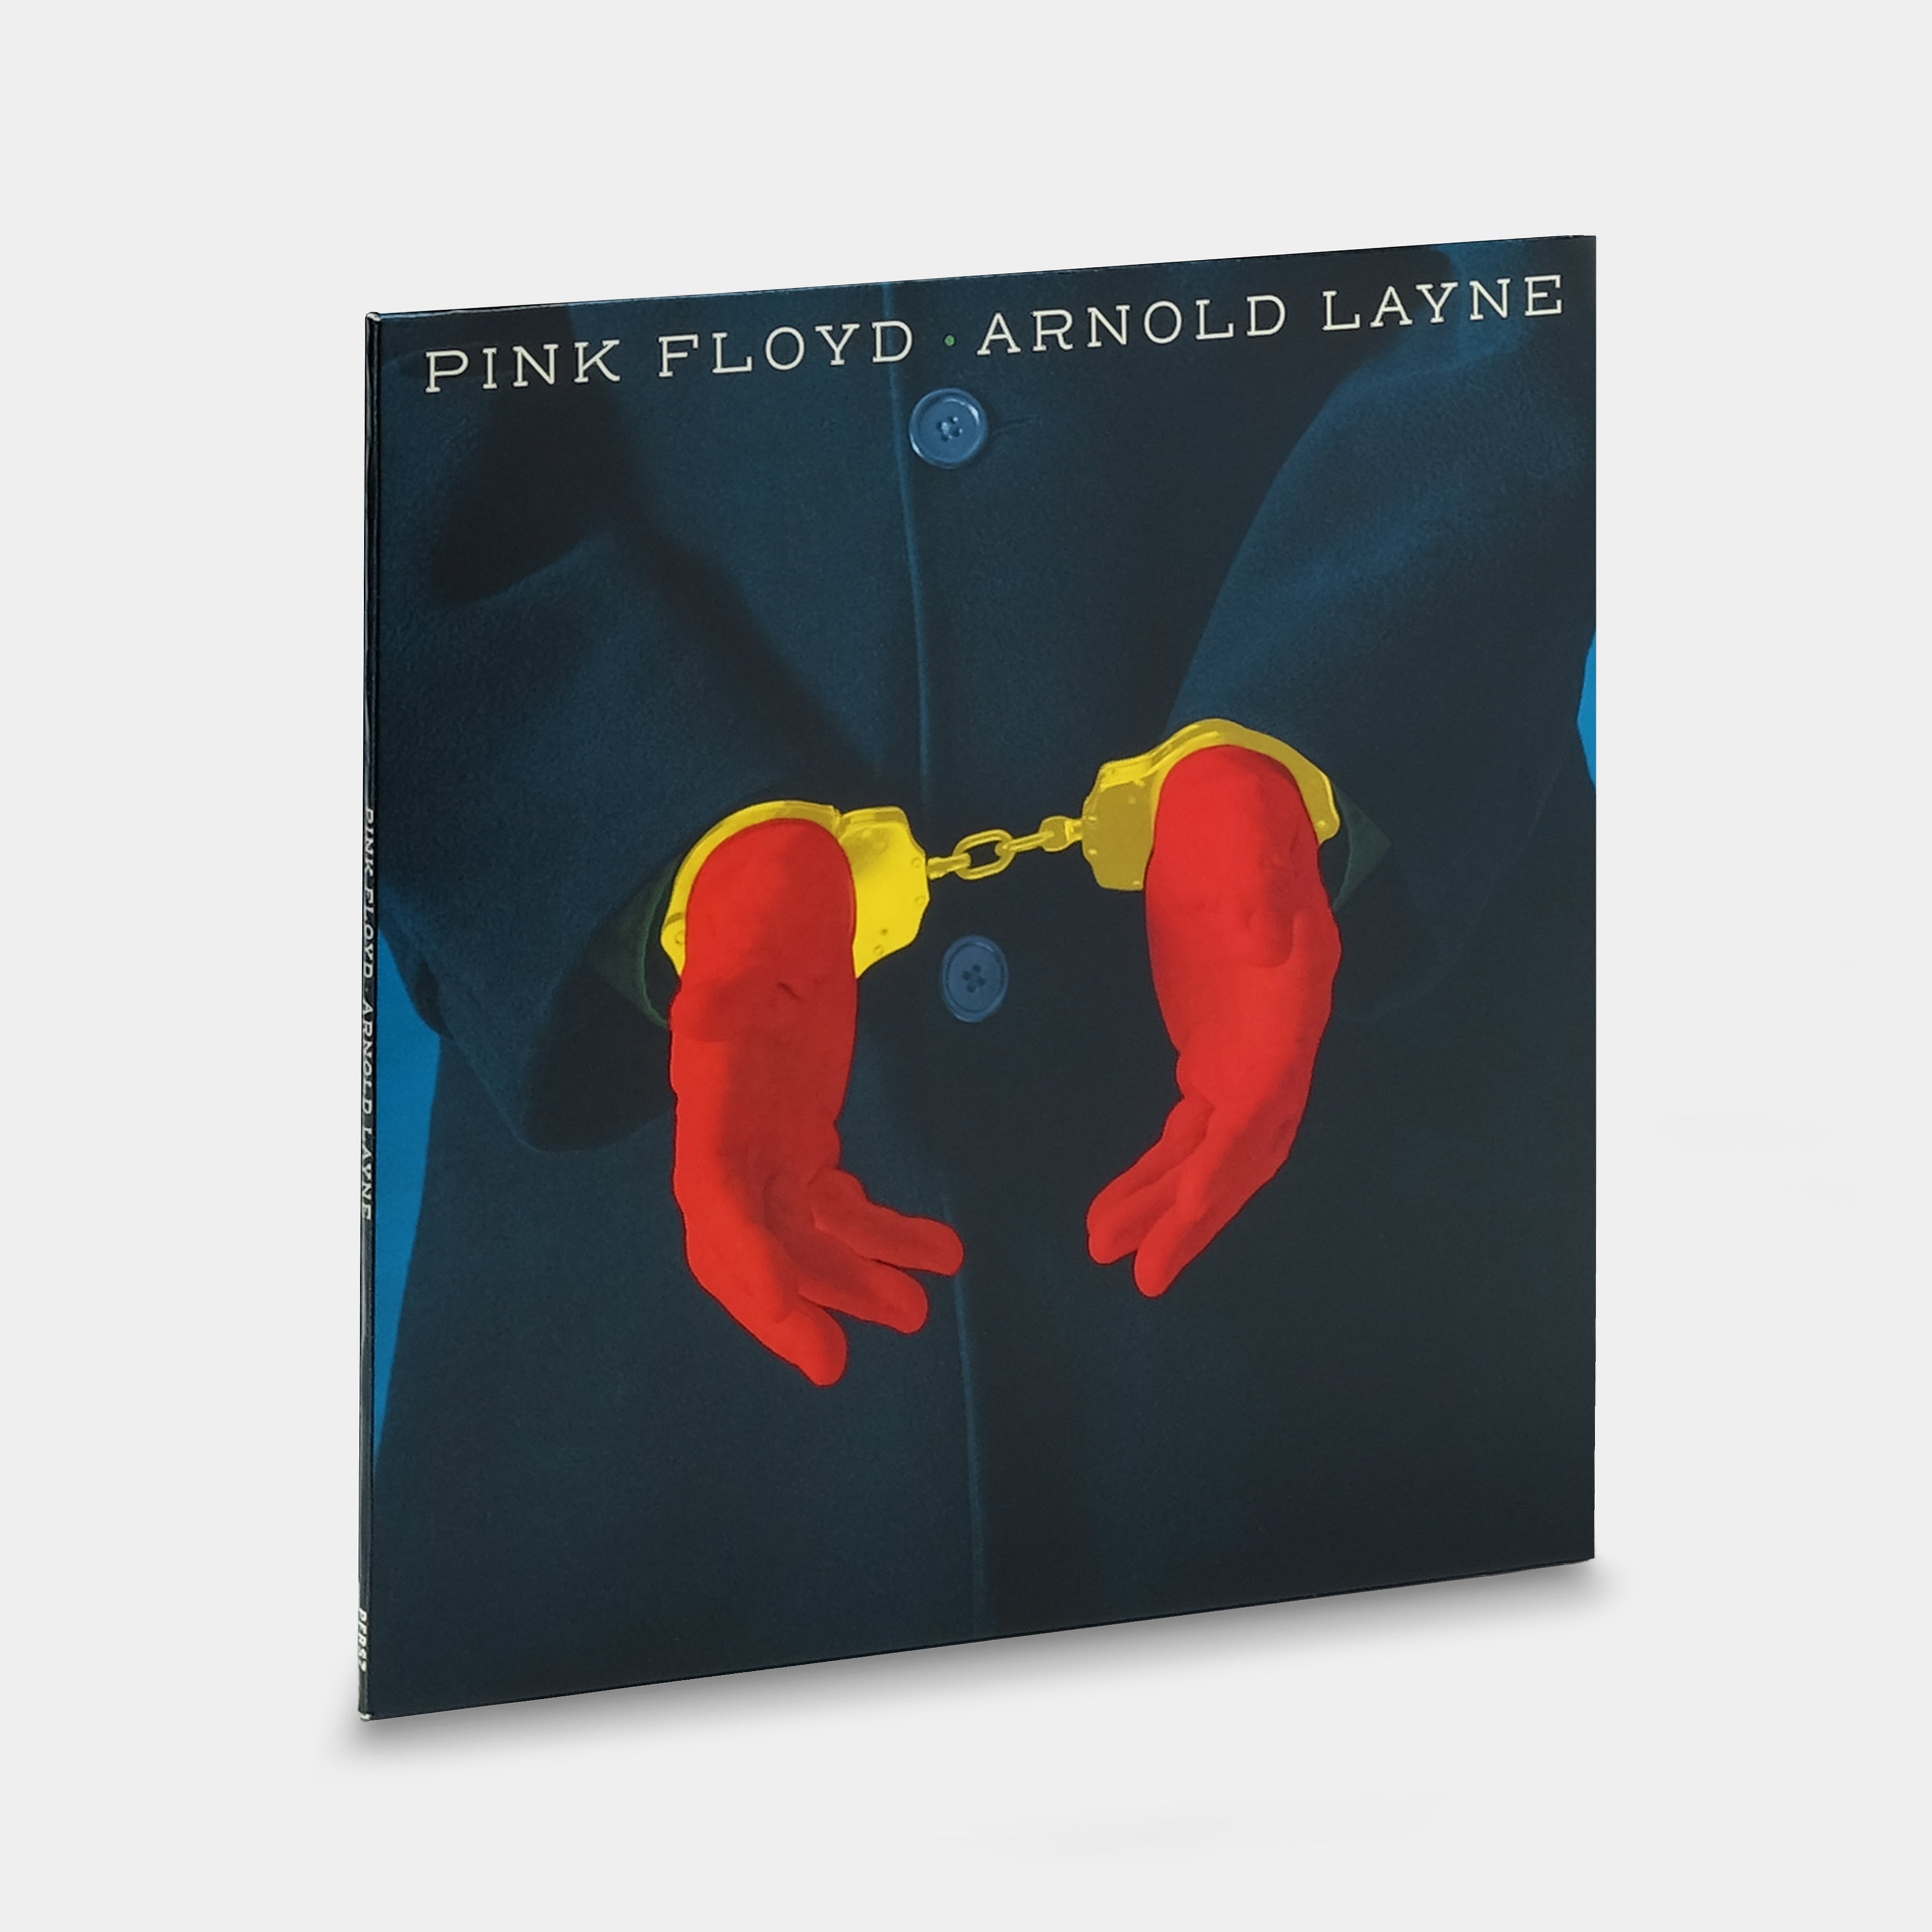 Pink Floyd - Arnold Layne (Live At Syd Barrett Tribute, 2007) Limited Edition 7" Single Vinyl Record